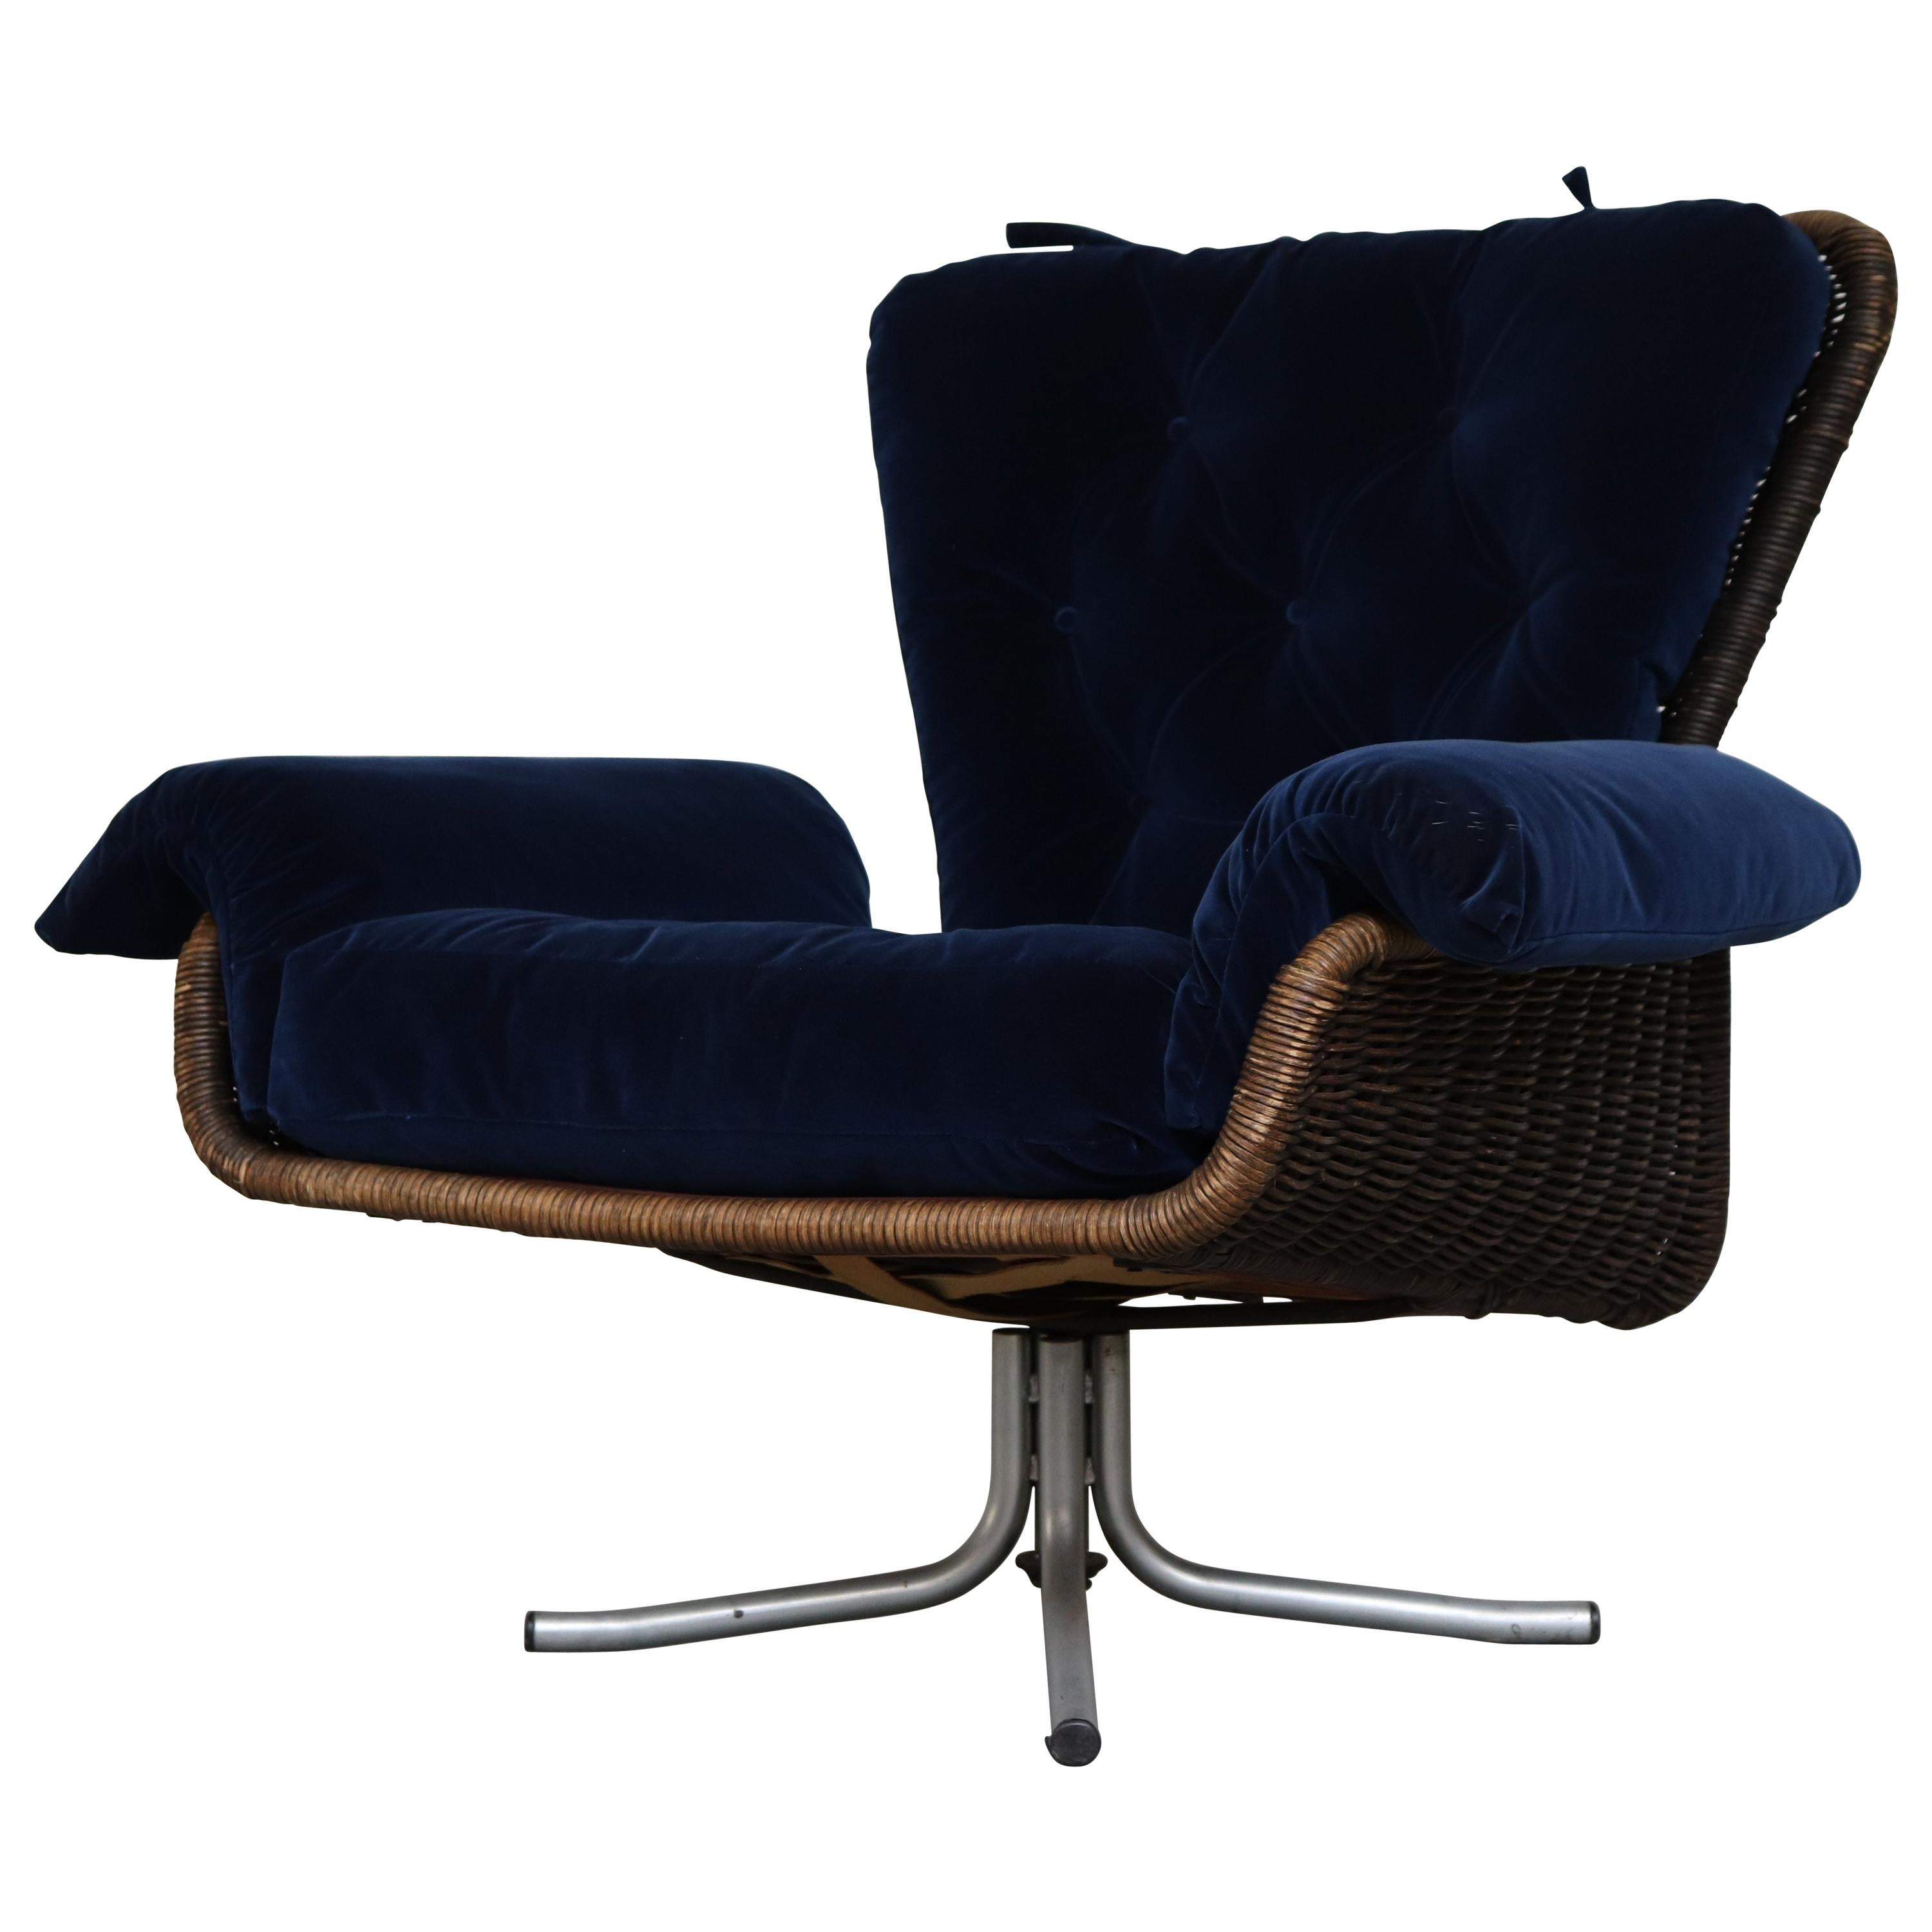 Gerard van den Berg Attributed Woven Rattan Lounge Chair